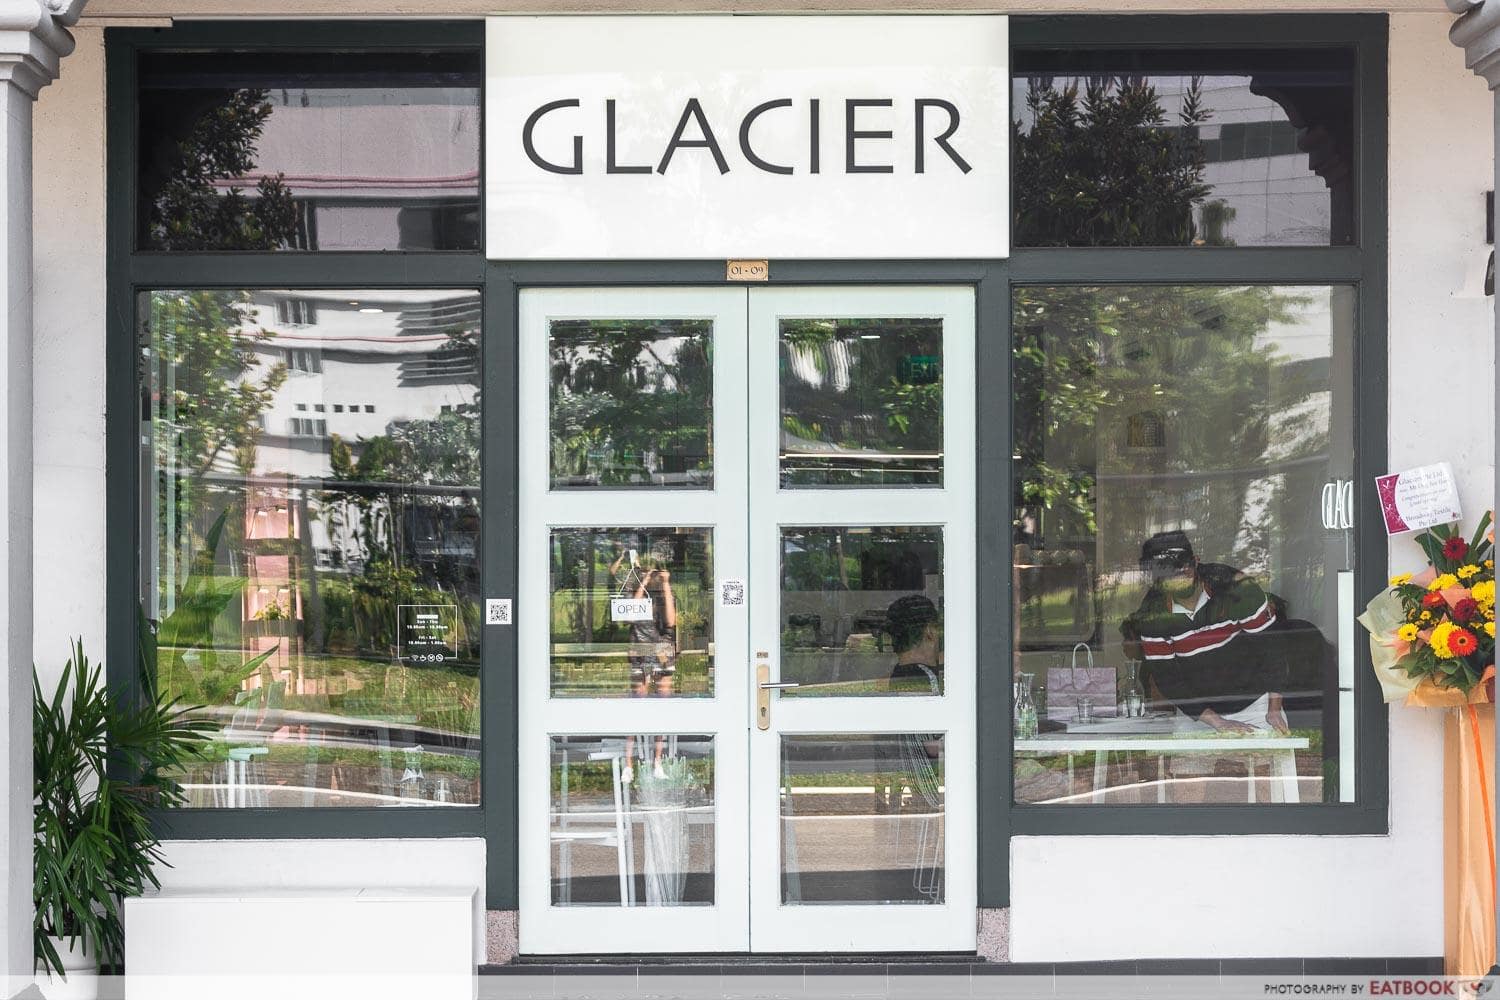 10 new restaurants in october - glacier storefront